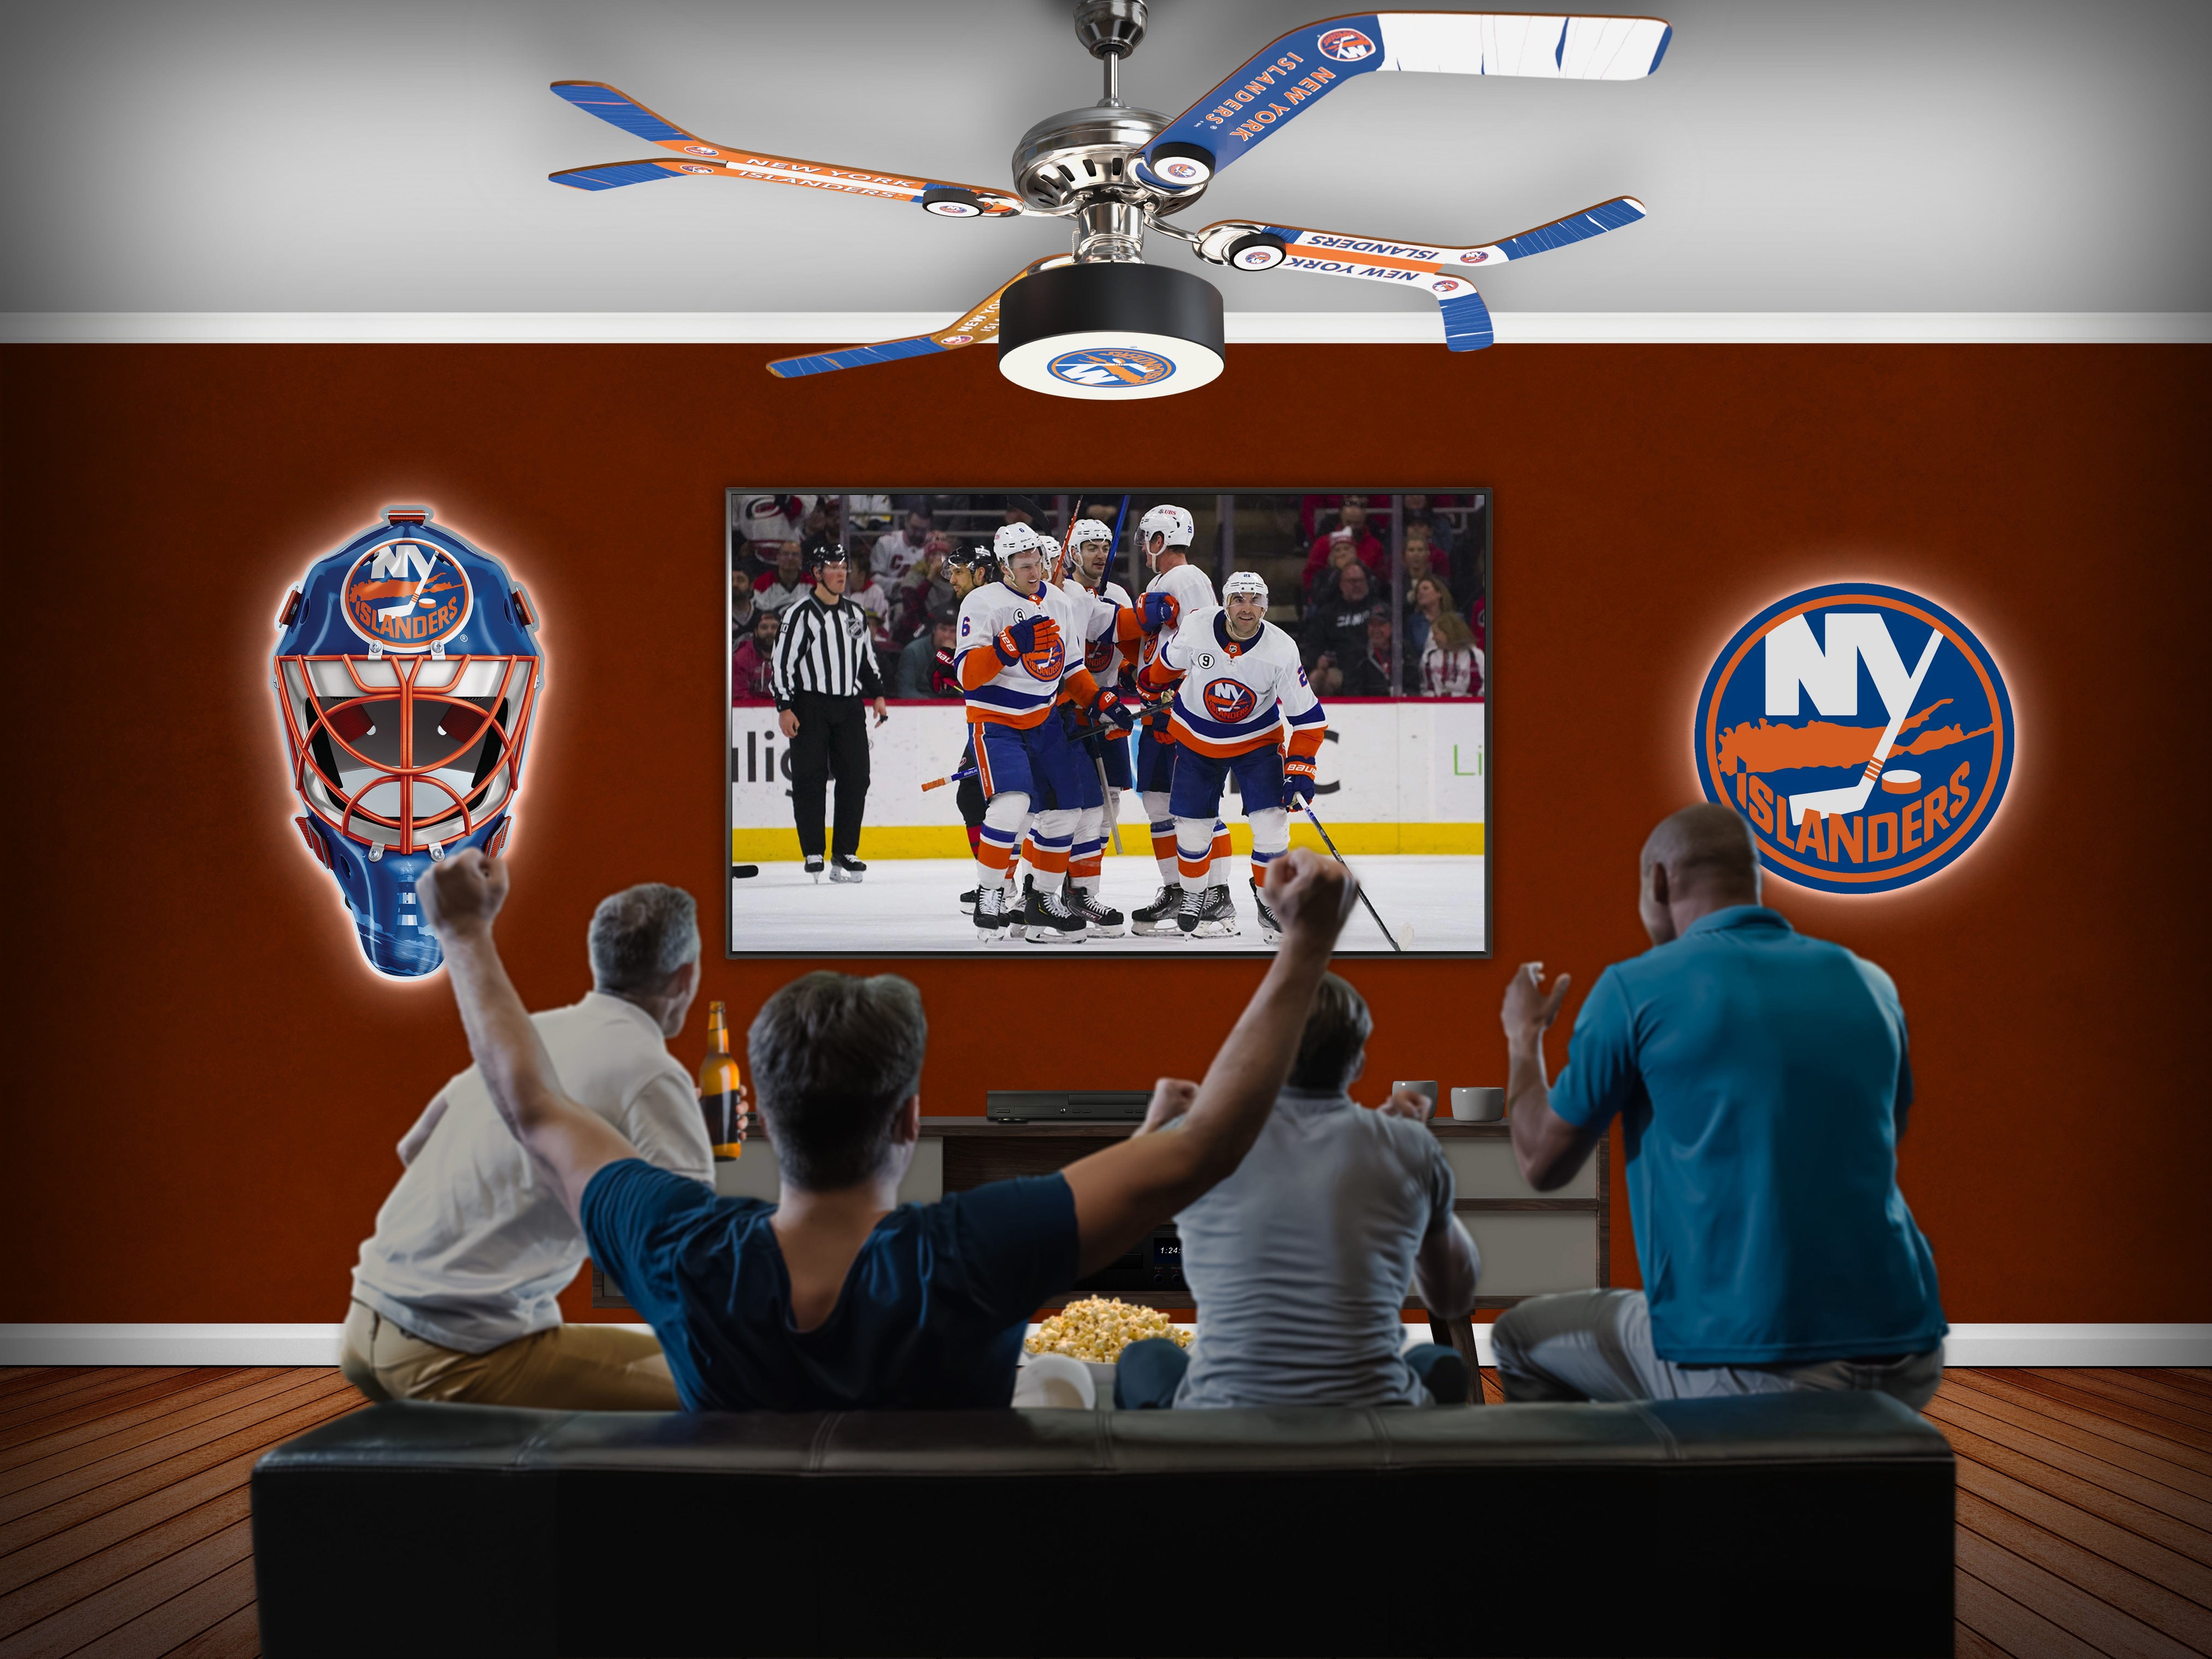 New York Islanders LED Wall Pennant